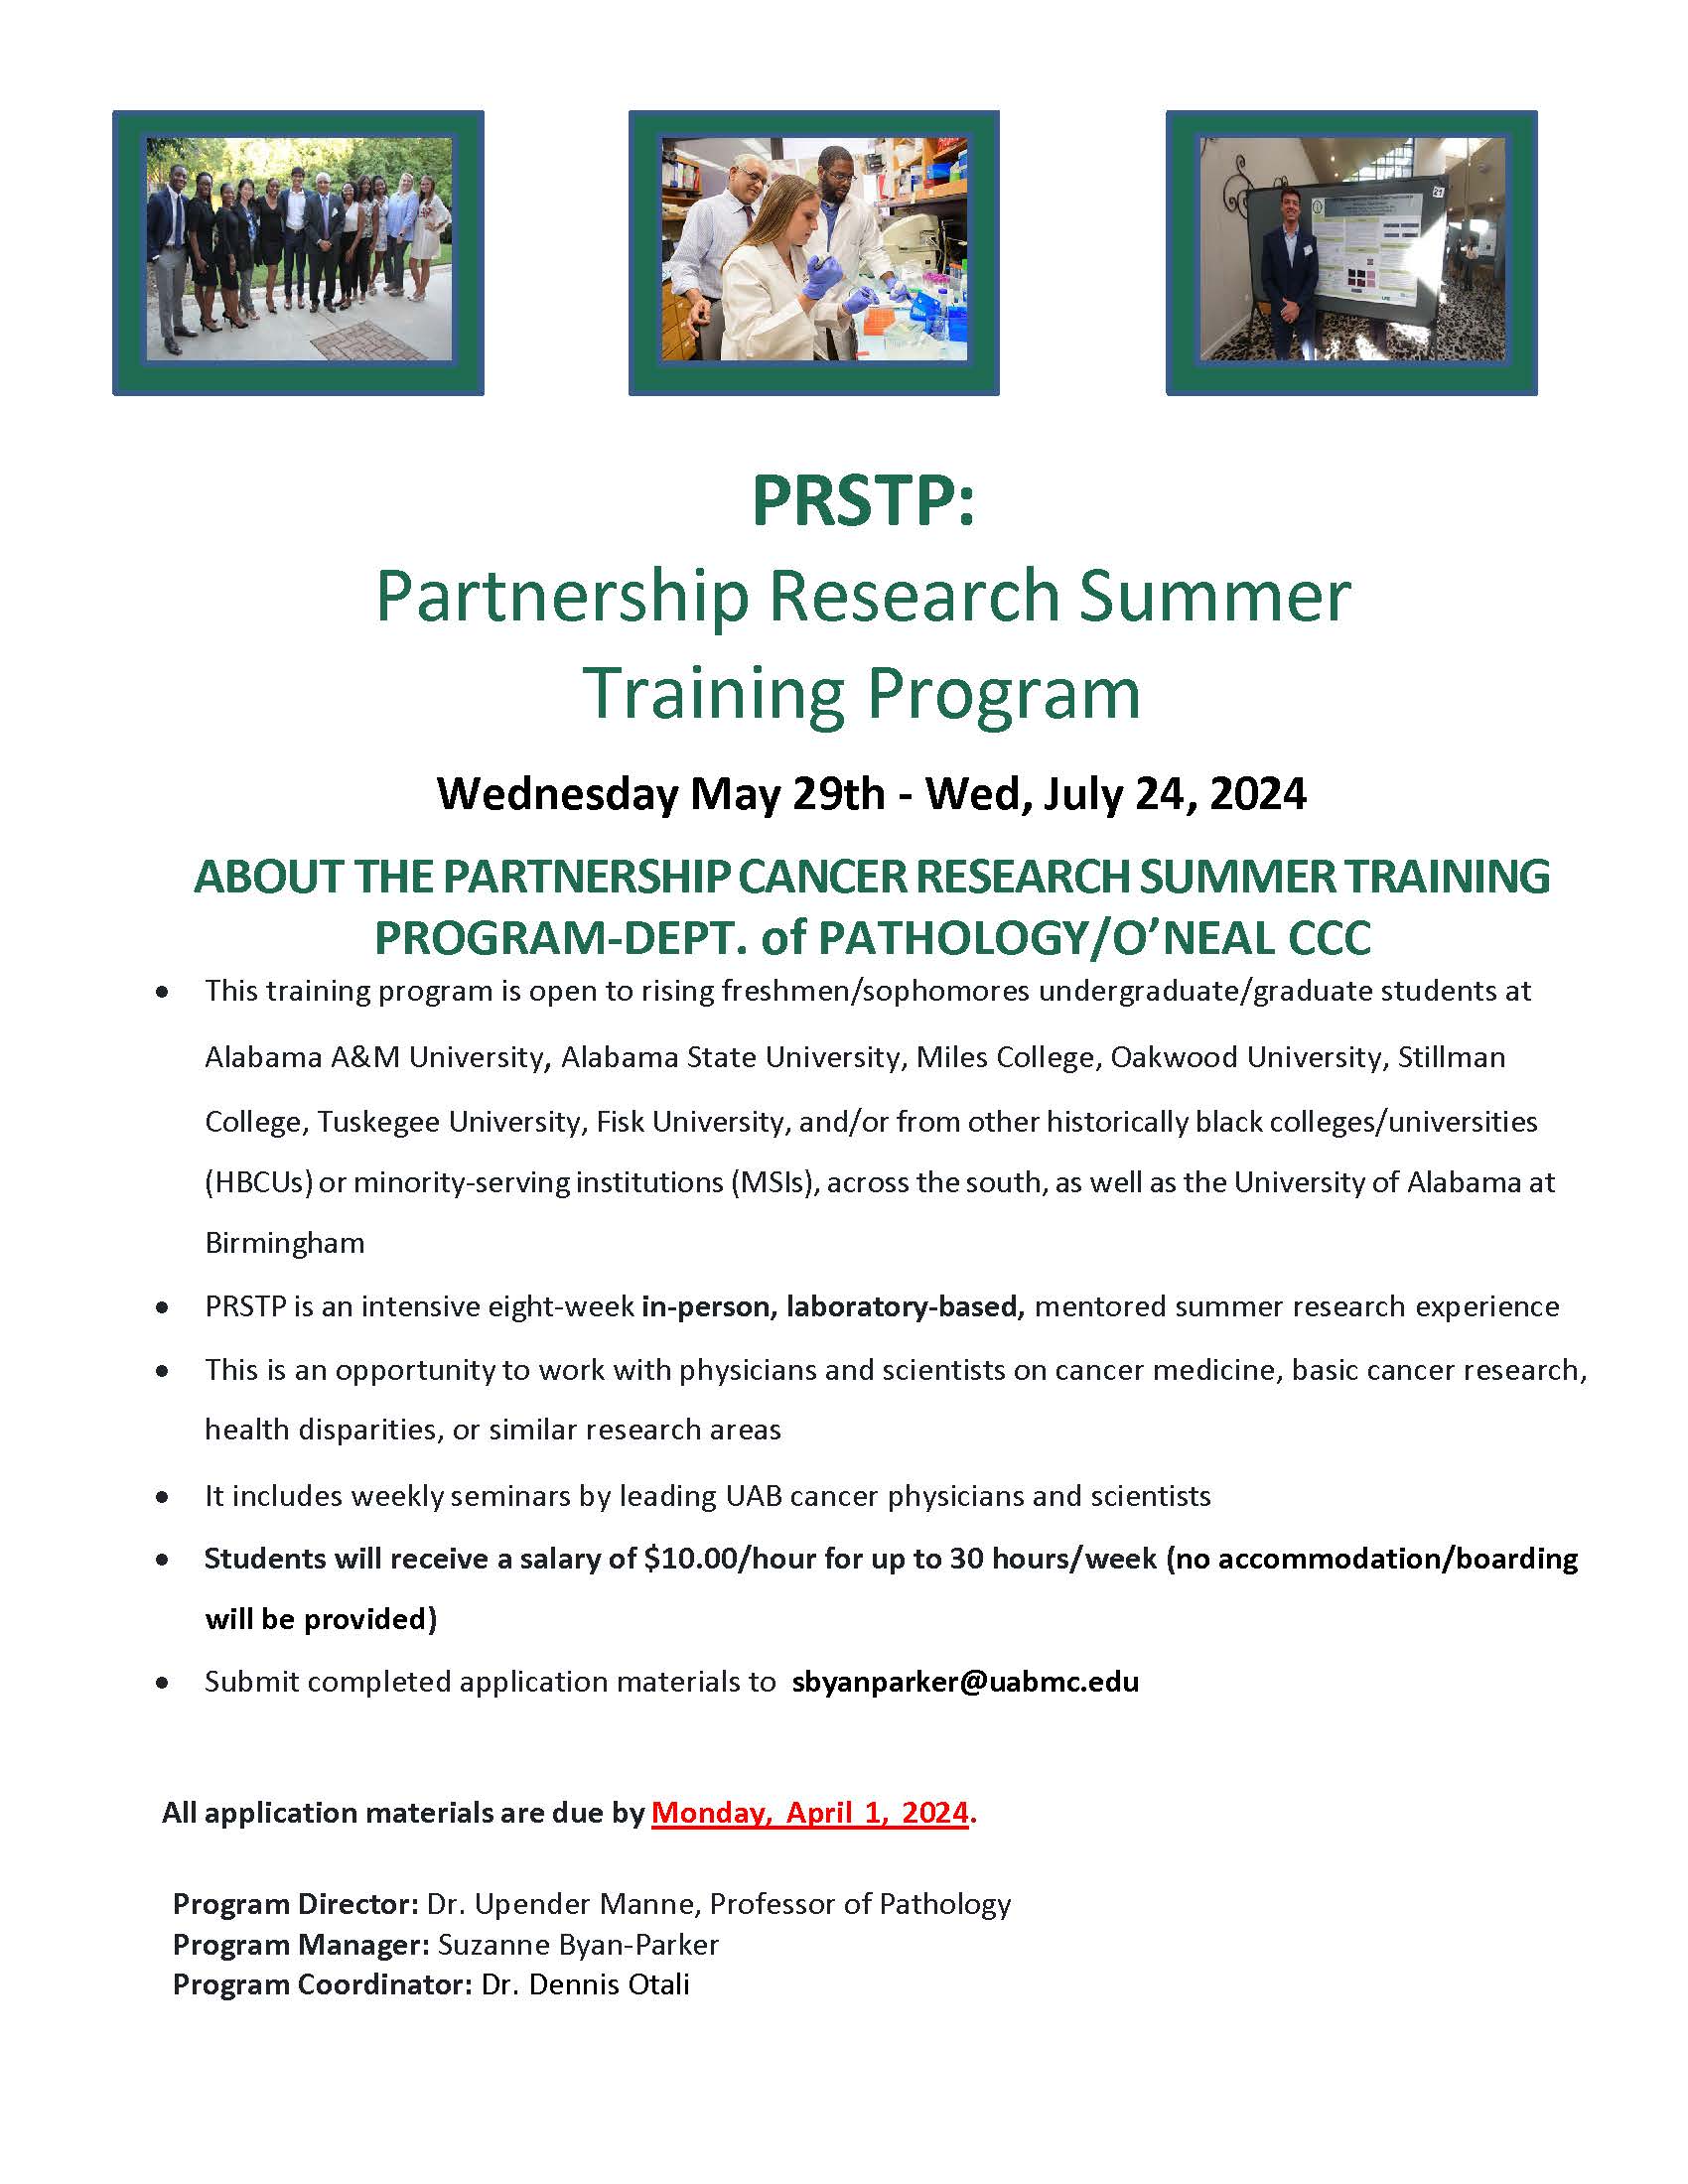 Cancer Partnership Research Summer Training Program